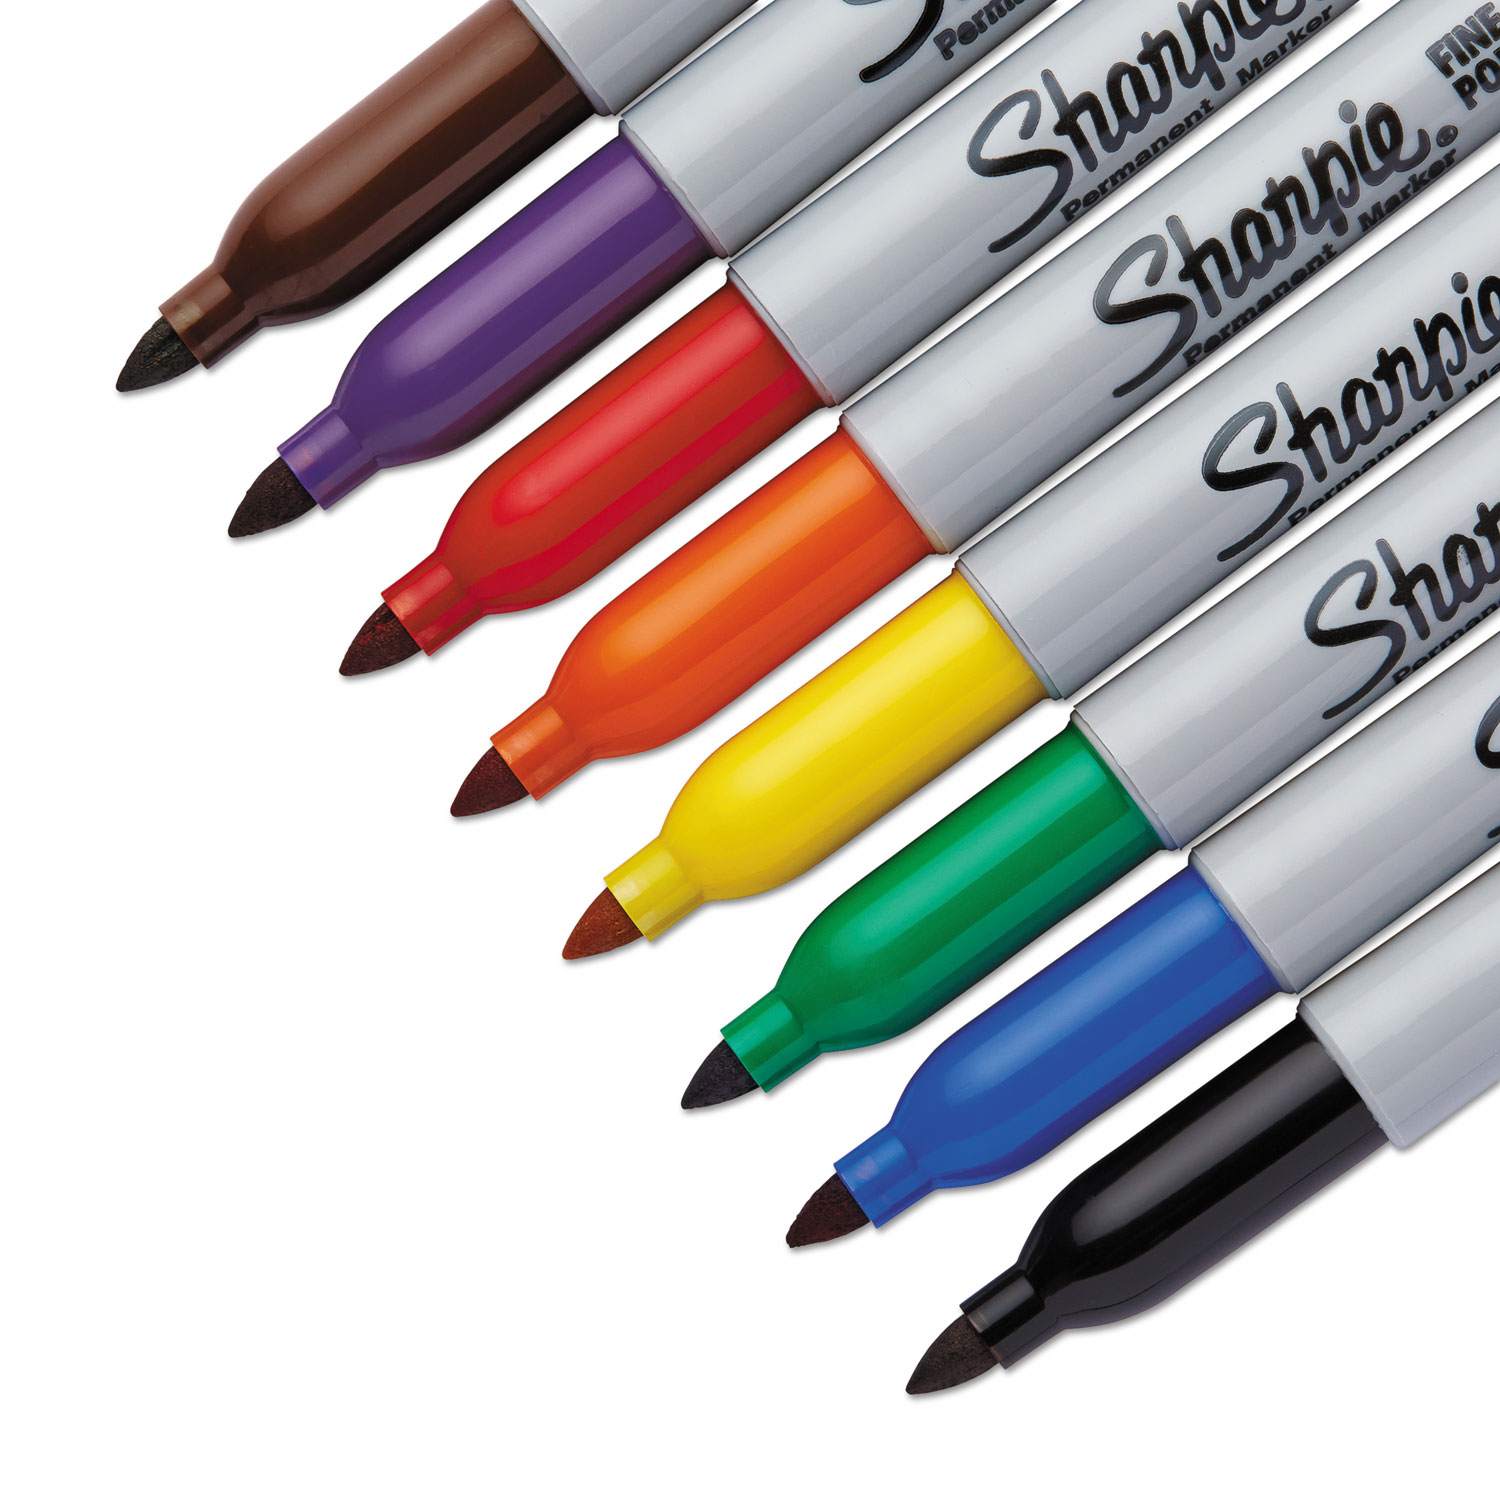 Sharpie Retractable Ultra Fine Tip Permanent Marker, Assorted Colors, 8/Set